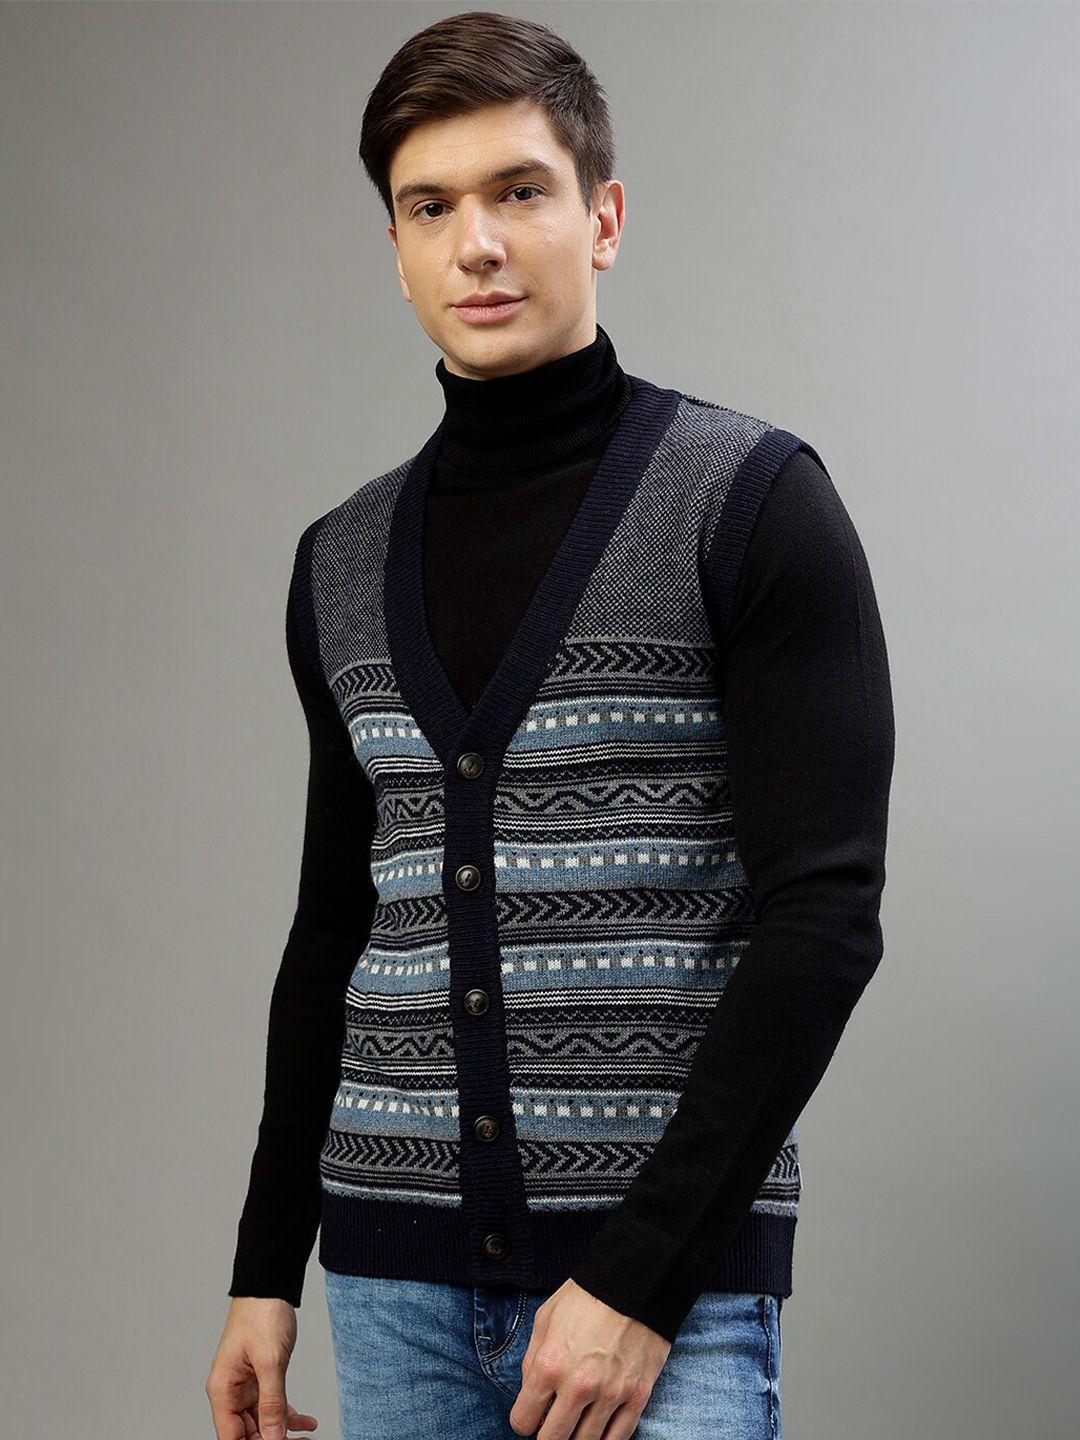 lindbergh-fair-isle-printed-v-neck-sleeveless-cardigan-sweater